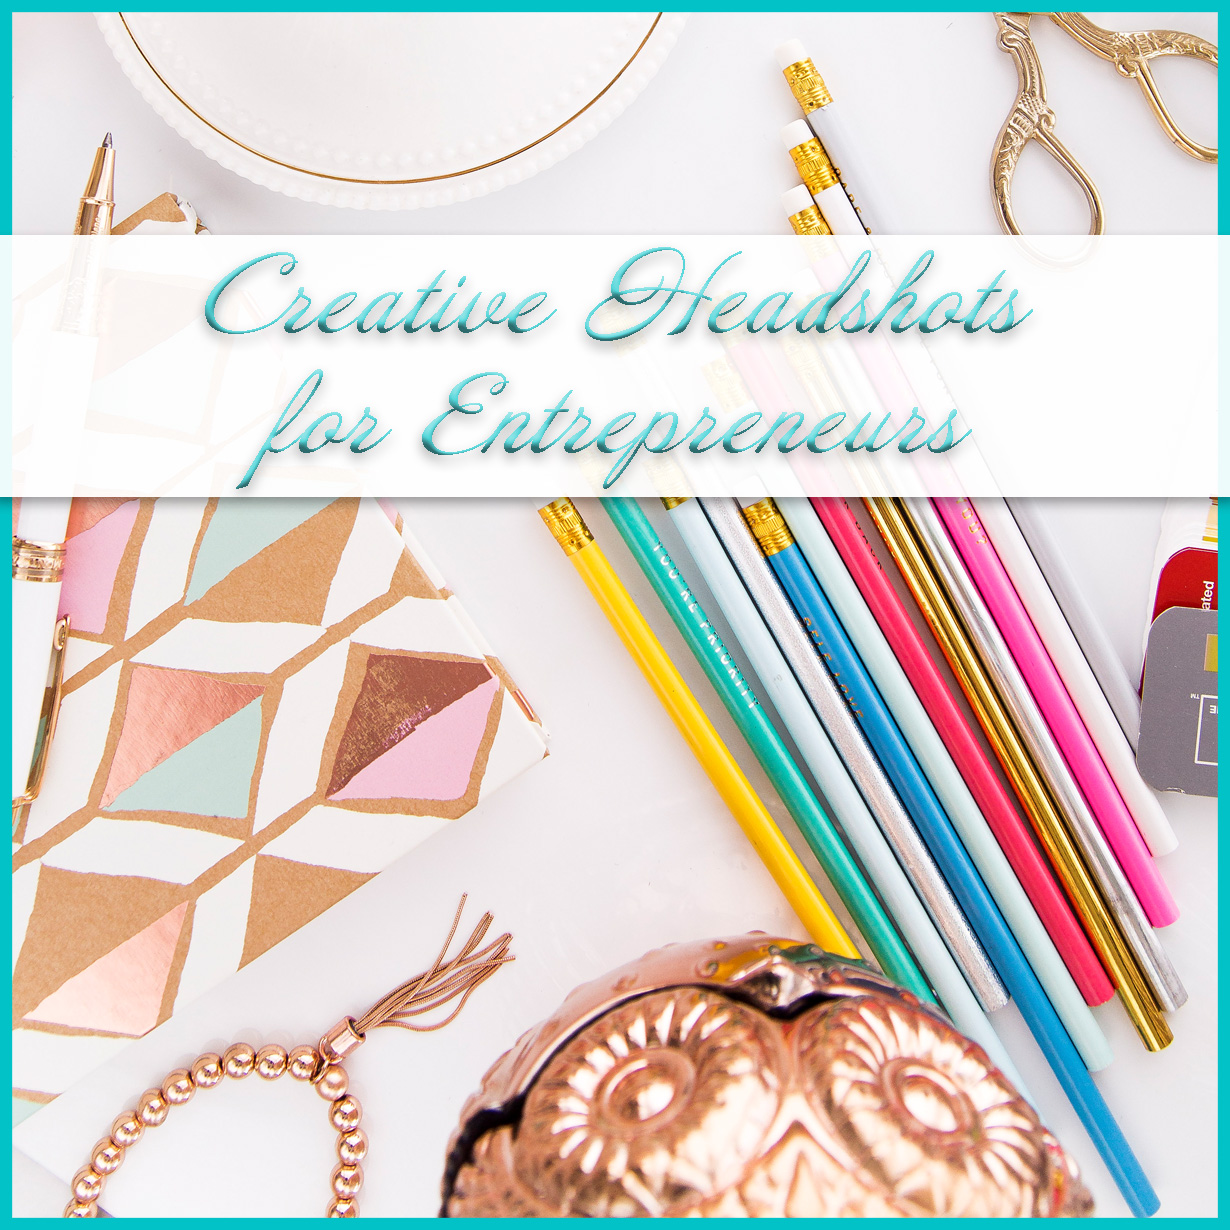 Creative Headshots for Entrepreneurs